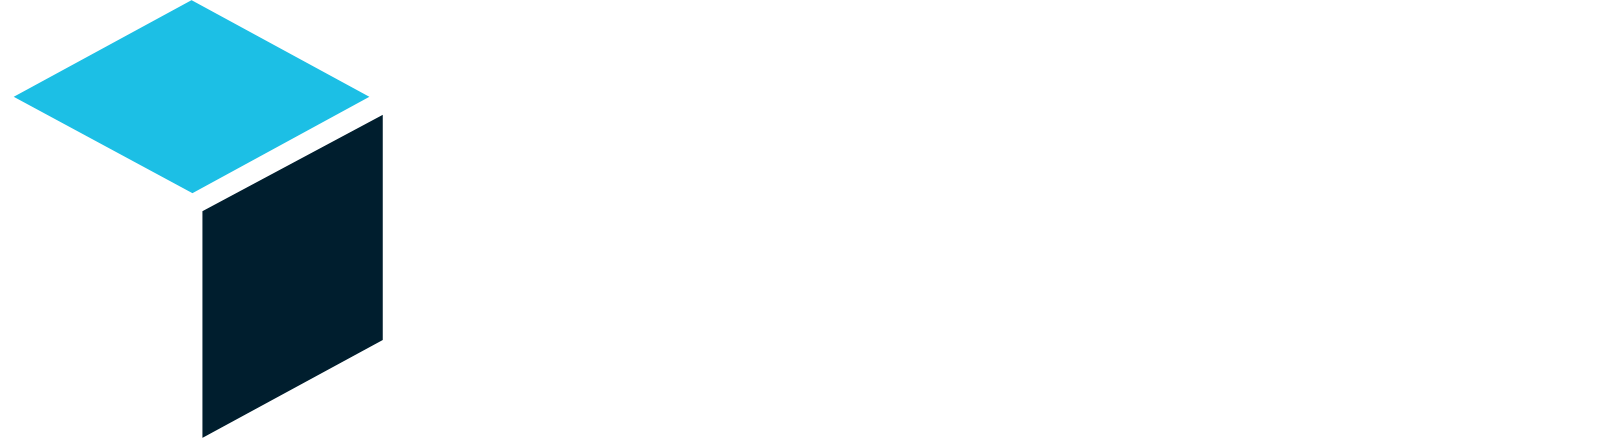 blue block logo